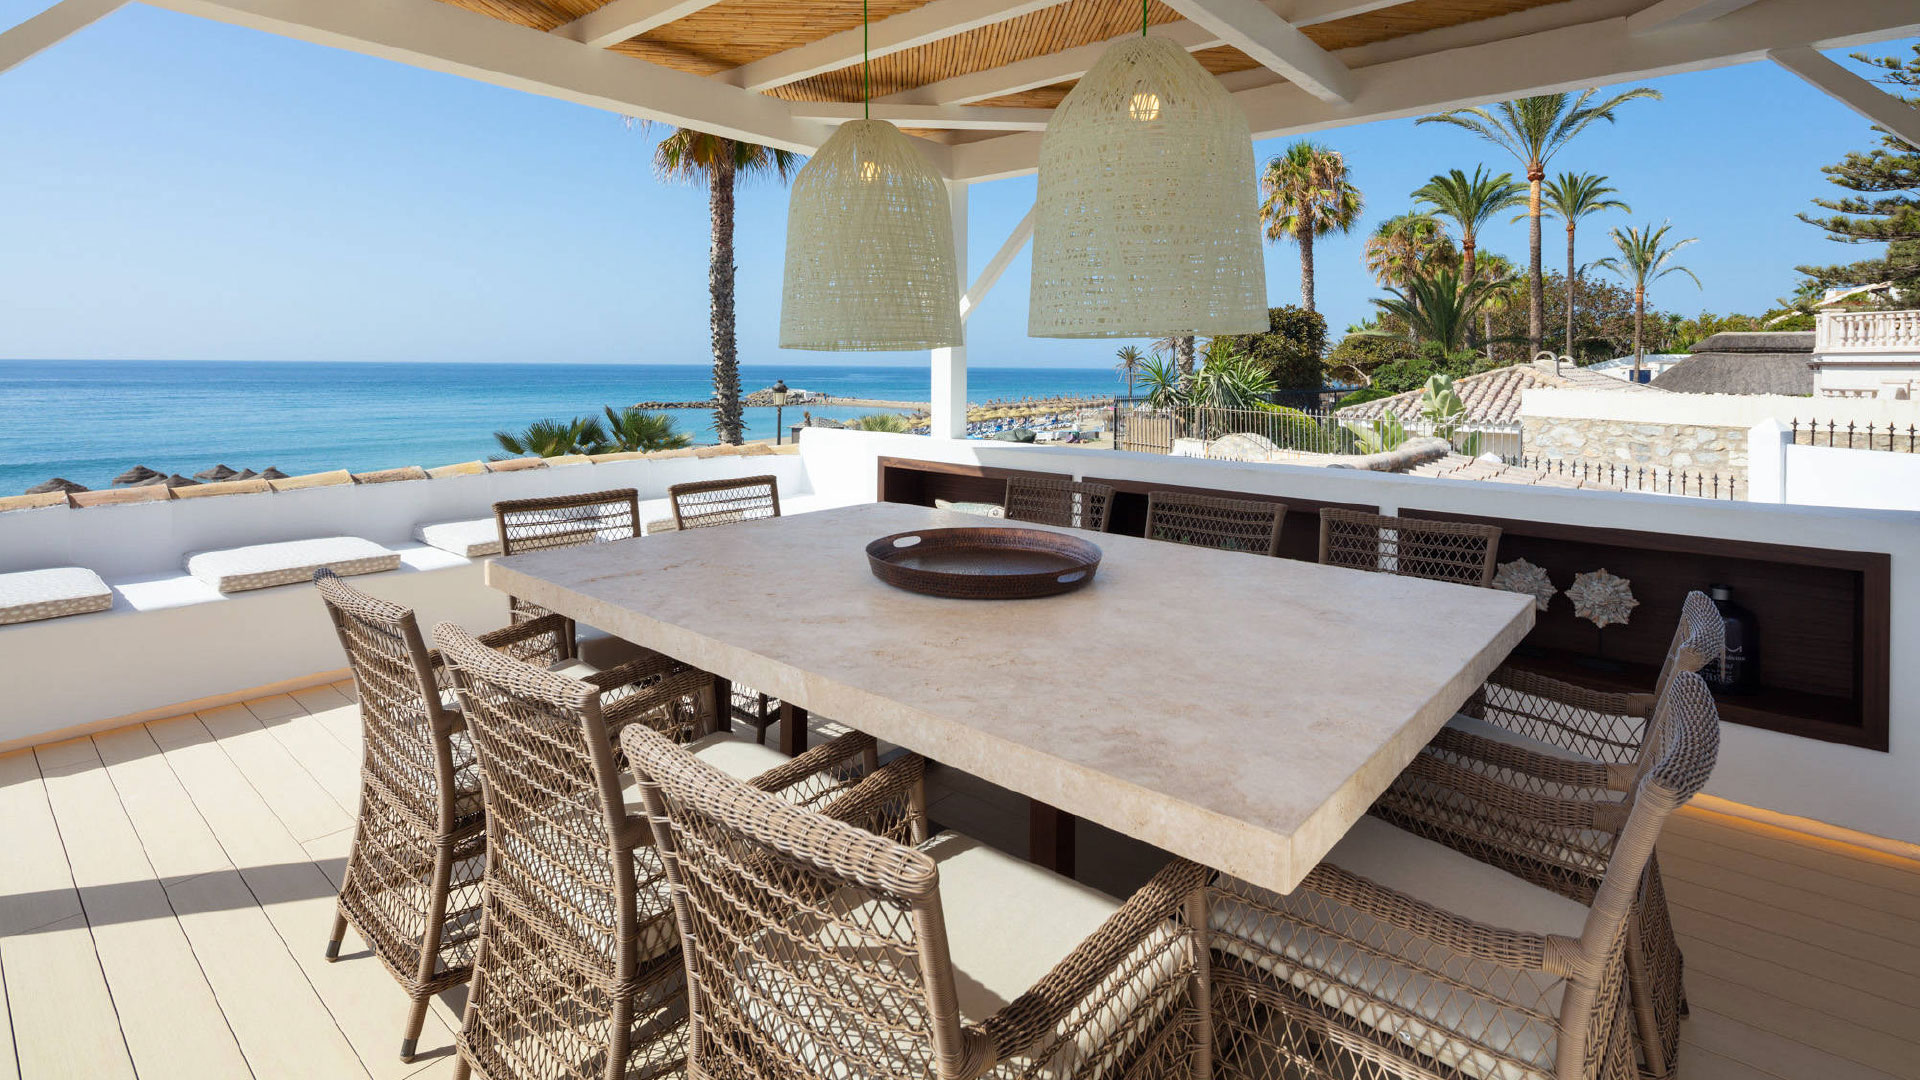 What Makes a Luxury Rental? Location Beachfront Villa